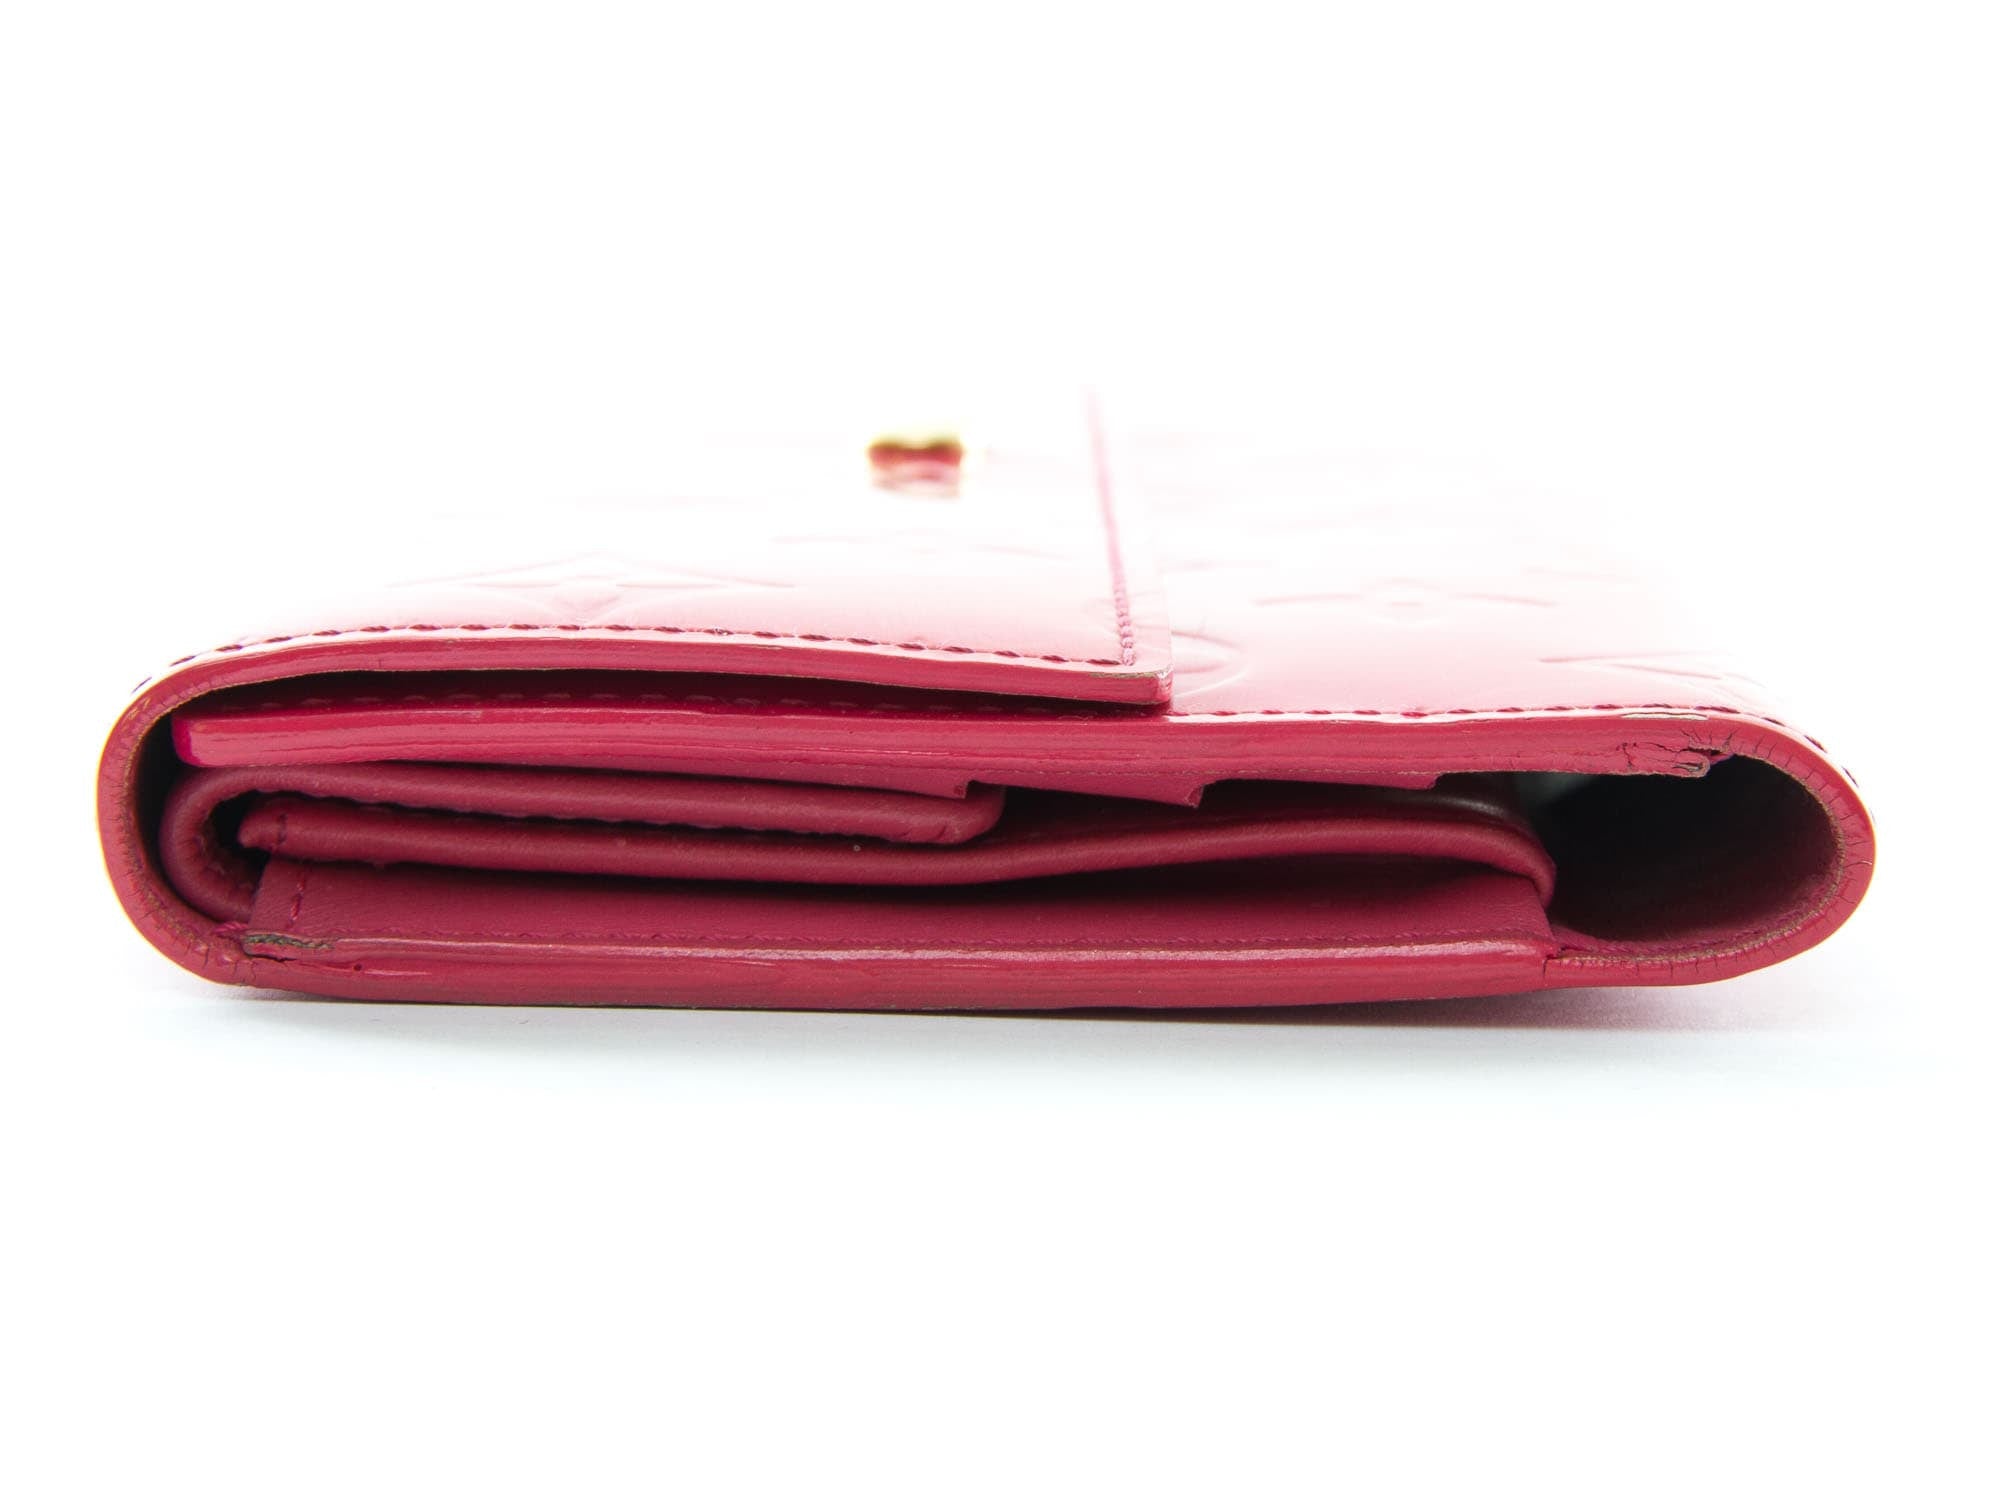 Authentic Louis Vuitton Red EPI Leather Porte-Tresor International Wallet